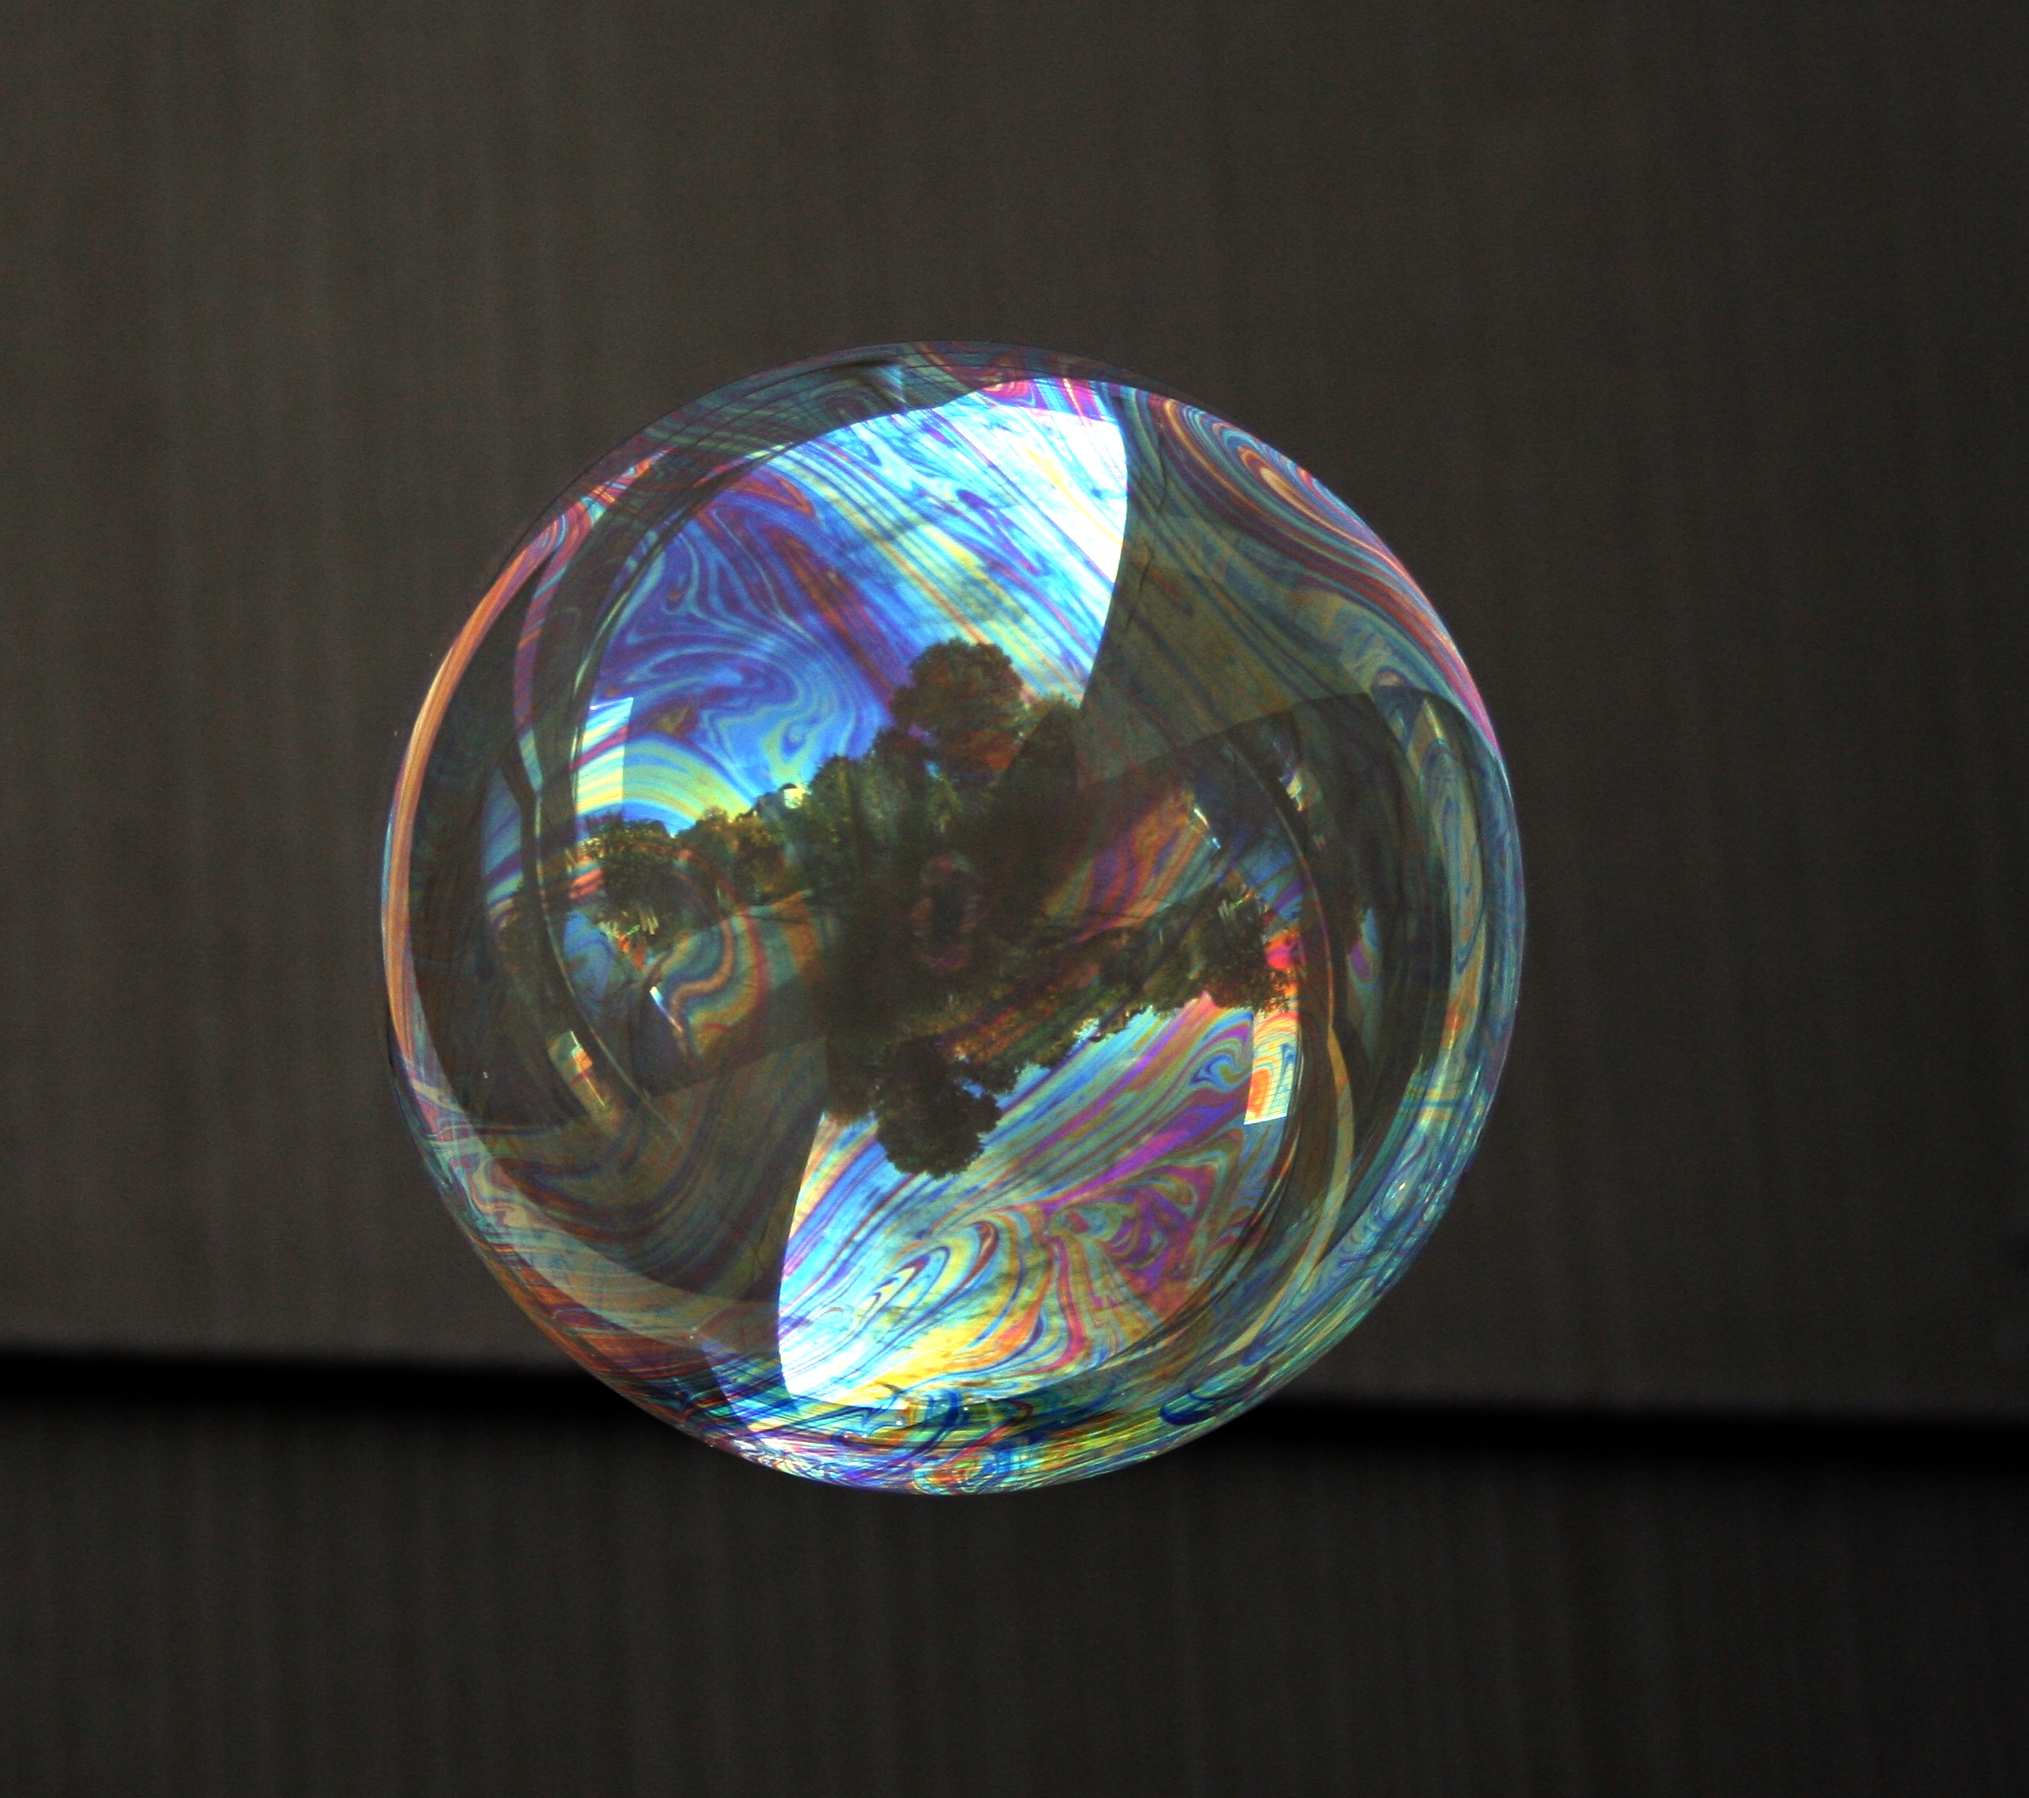 File:Soap bubble 10.JPG - Wikimedia Commons